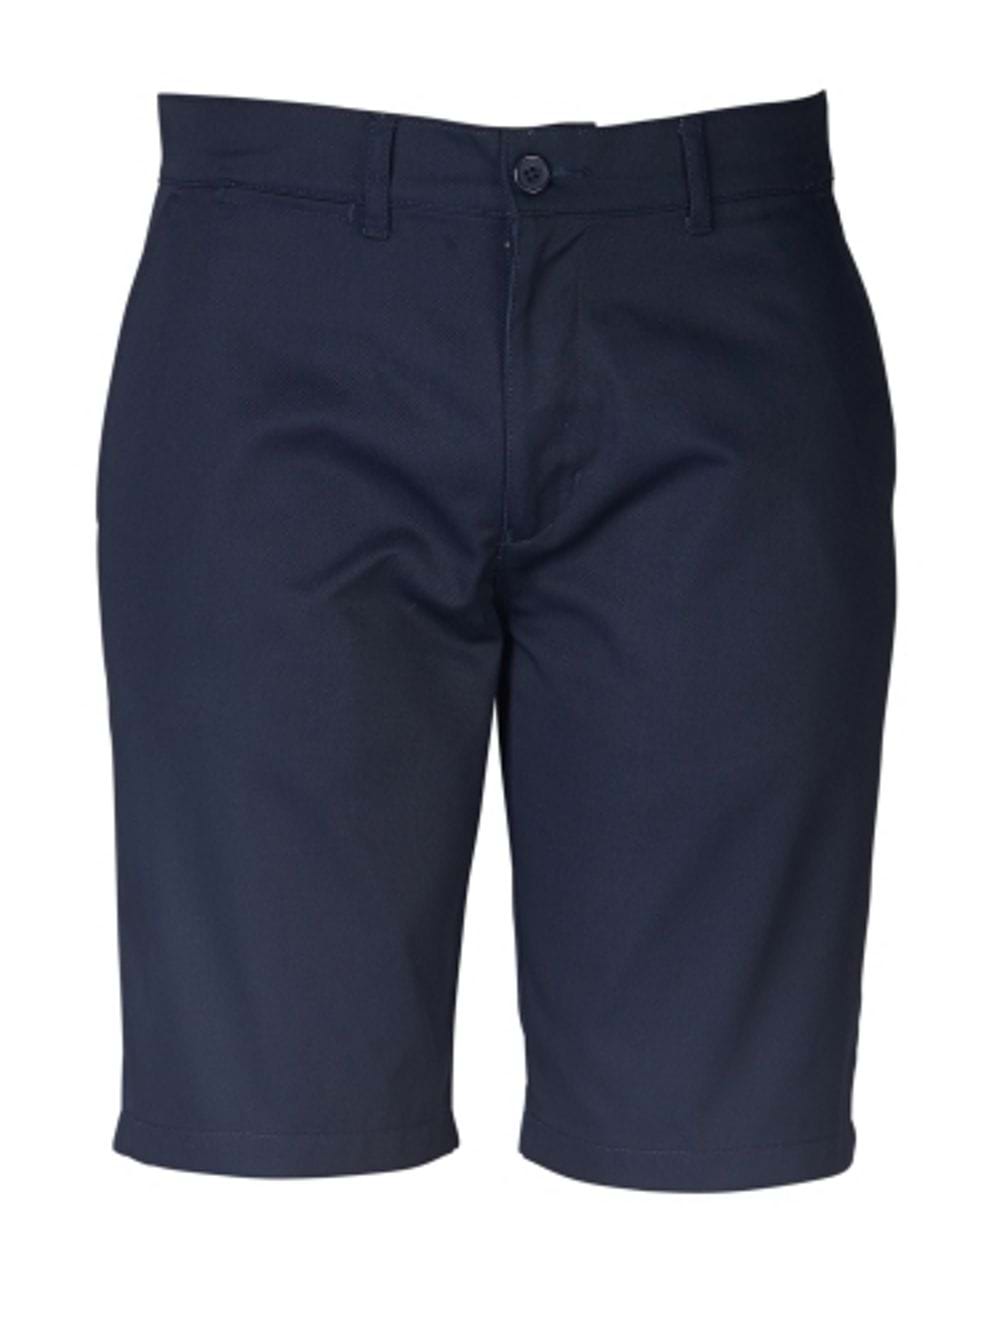 Westwood Bermuda Chino Shorts - Navy / 44